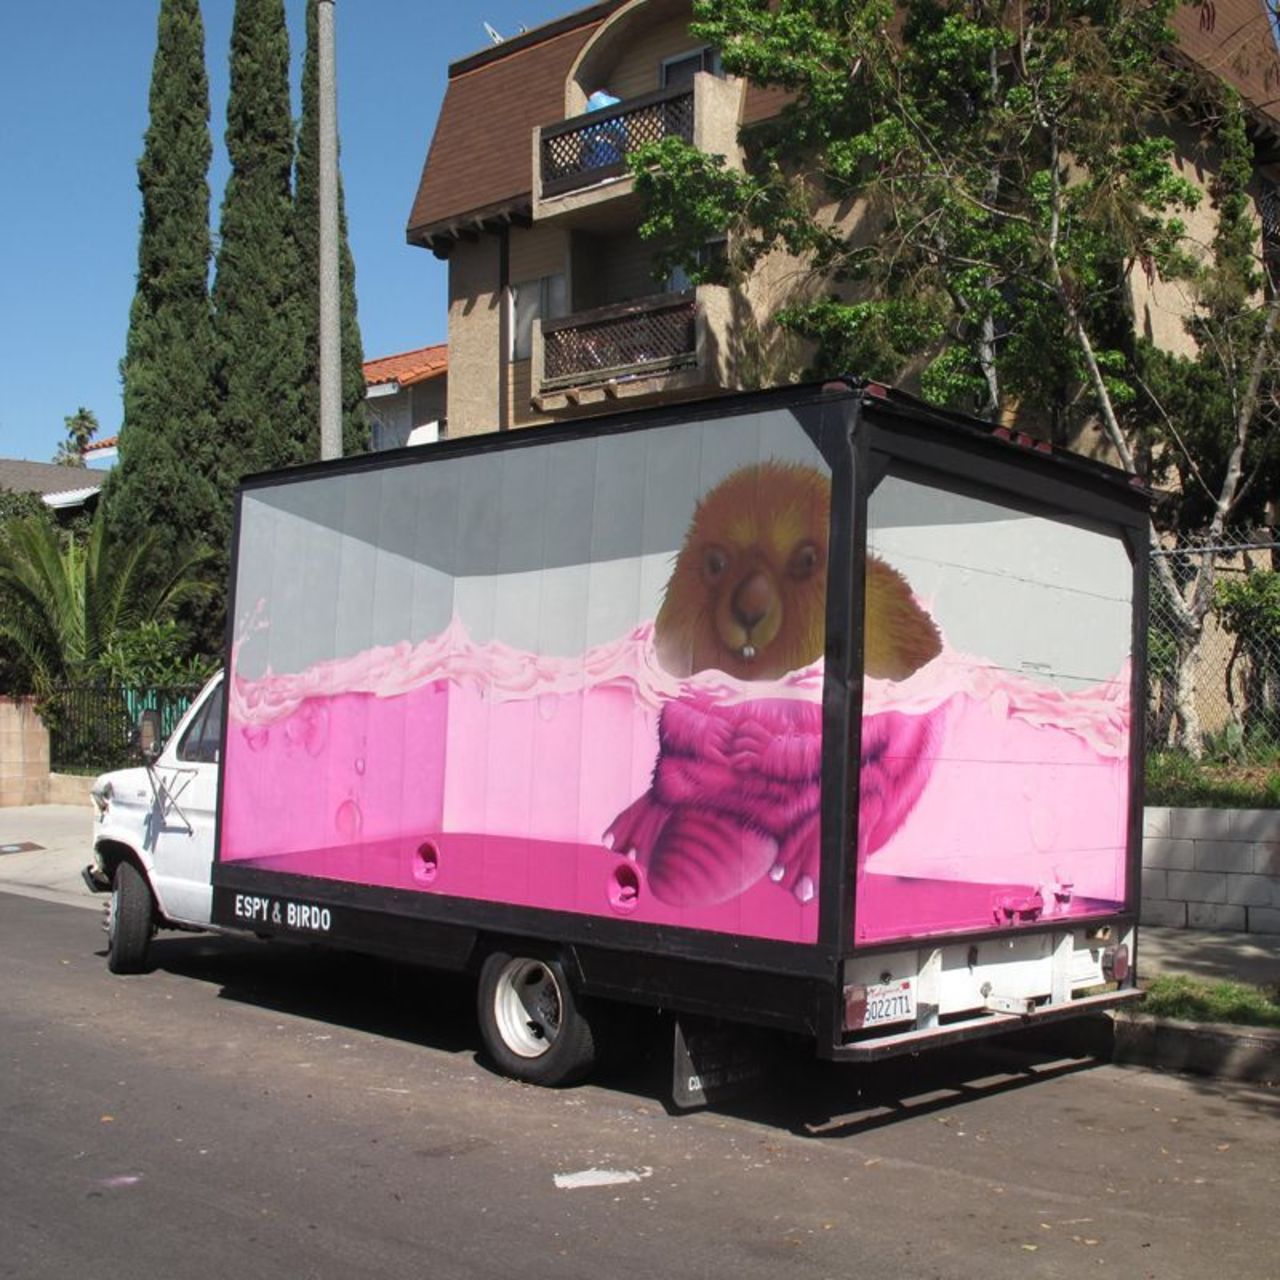 Incredible creation of dimension and movement in this piece by #JerryRugg aka #birdO (http://globalstreetart.com/jerryrugg)! -- #wallart #mural #graffiti https://t.co/Bxb1sYhbUJ